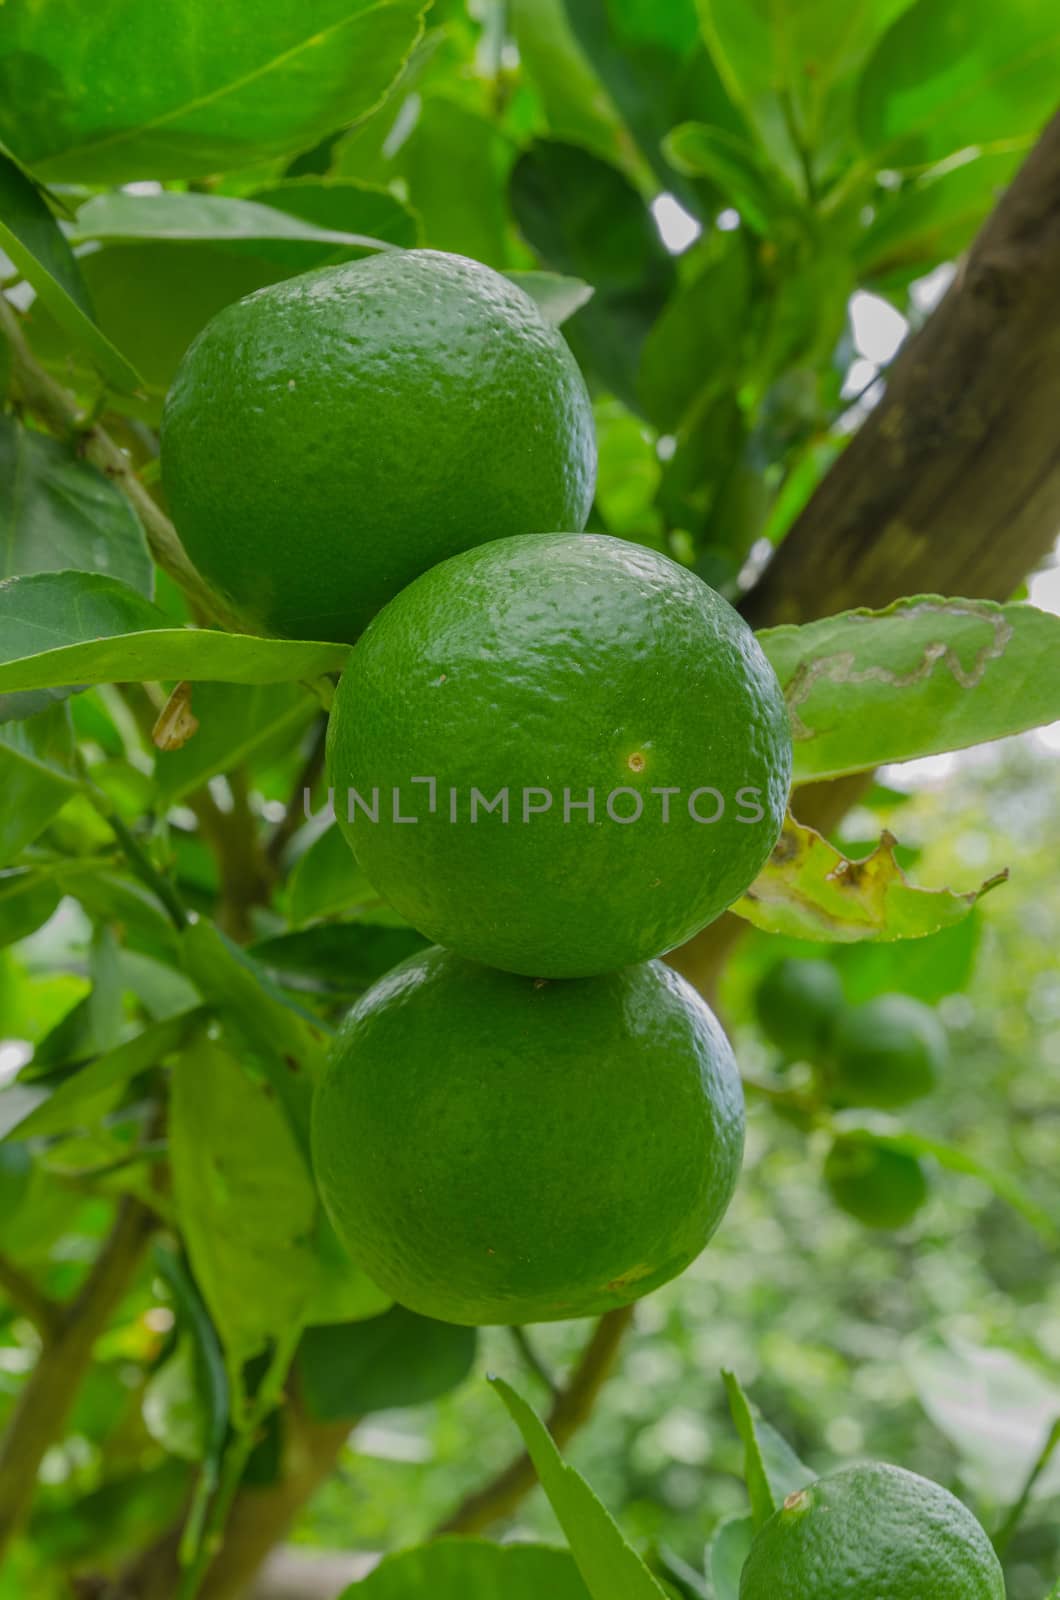 The green lemon ready for harvest by tamnongthai